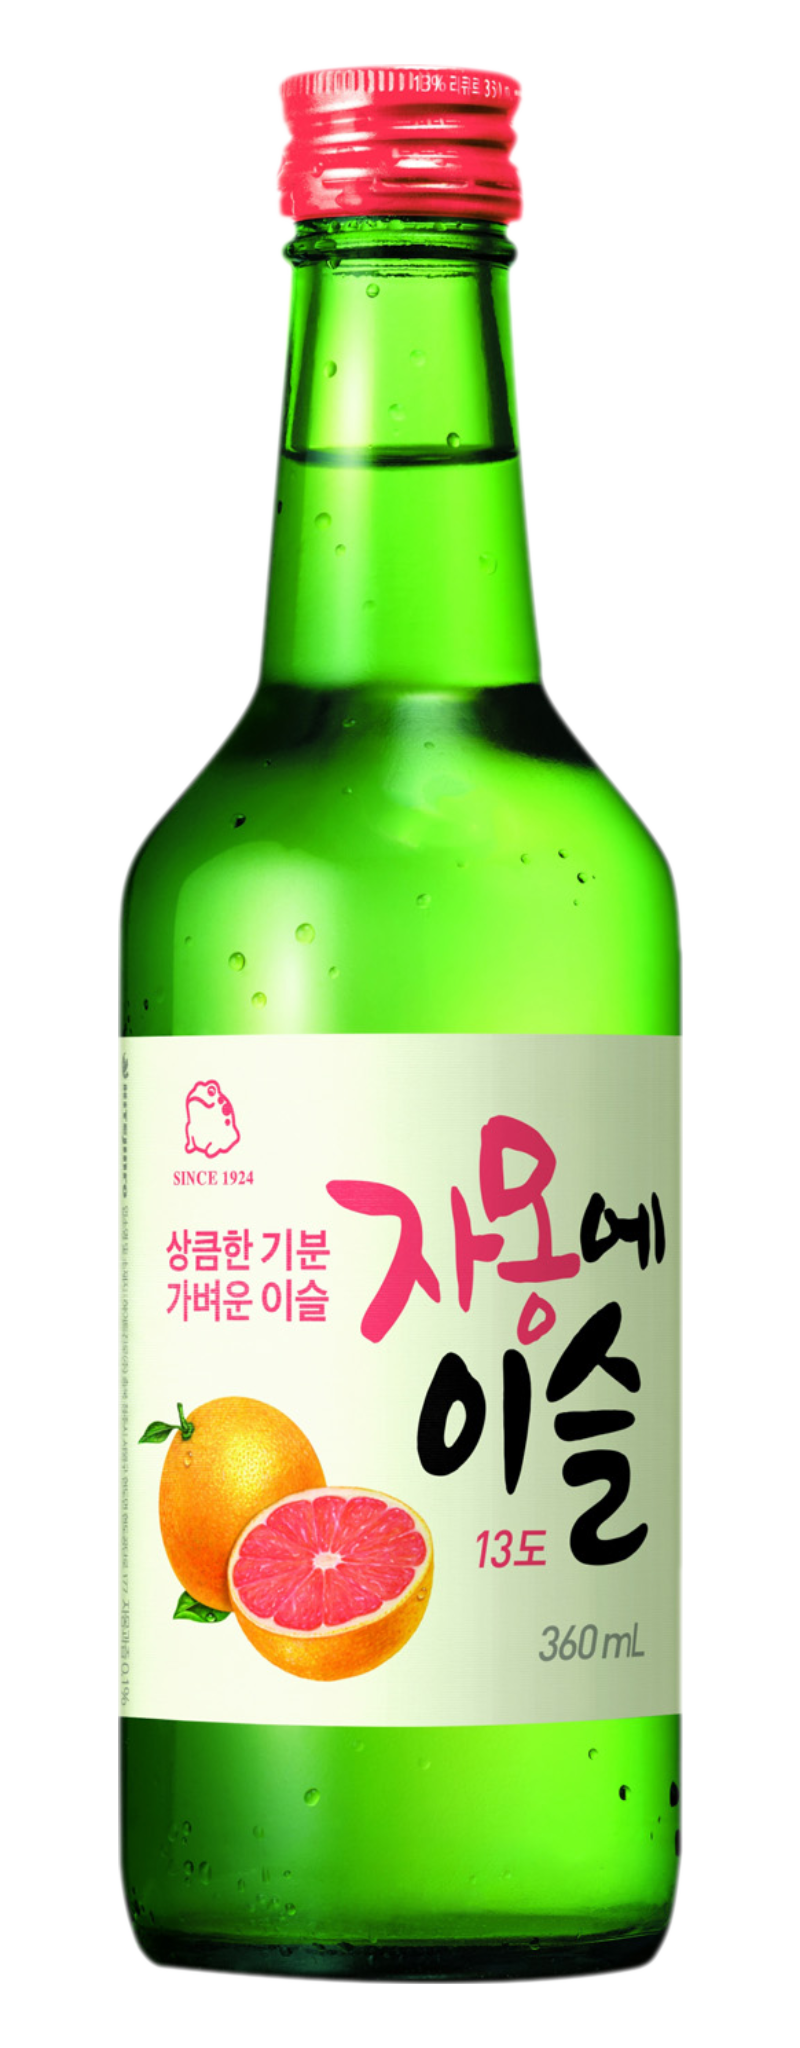 Jinro Grapefruit Soju (Thùng 20 chai)  - 360ml